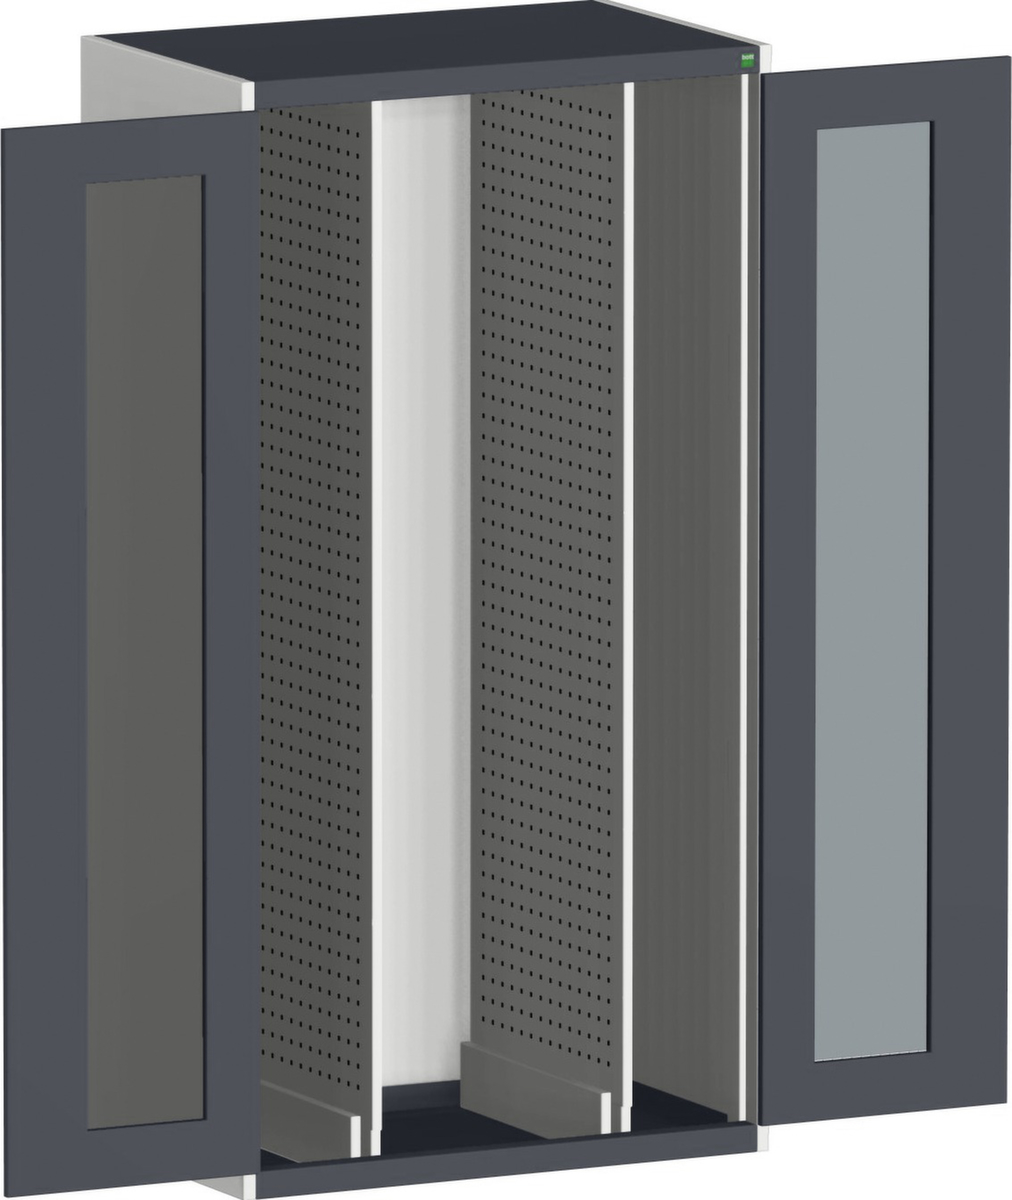 bott Armoire verticale cubio, 2 extensions, RAL7035 gris clair/RAL7016 gris anthracite  ZOOM